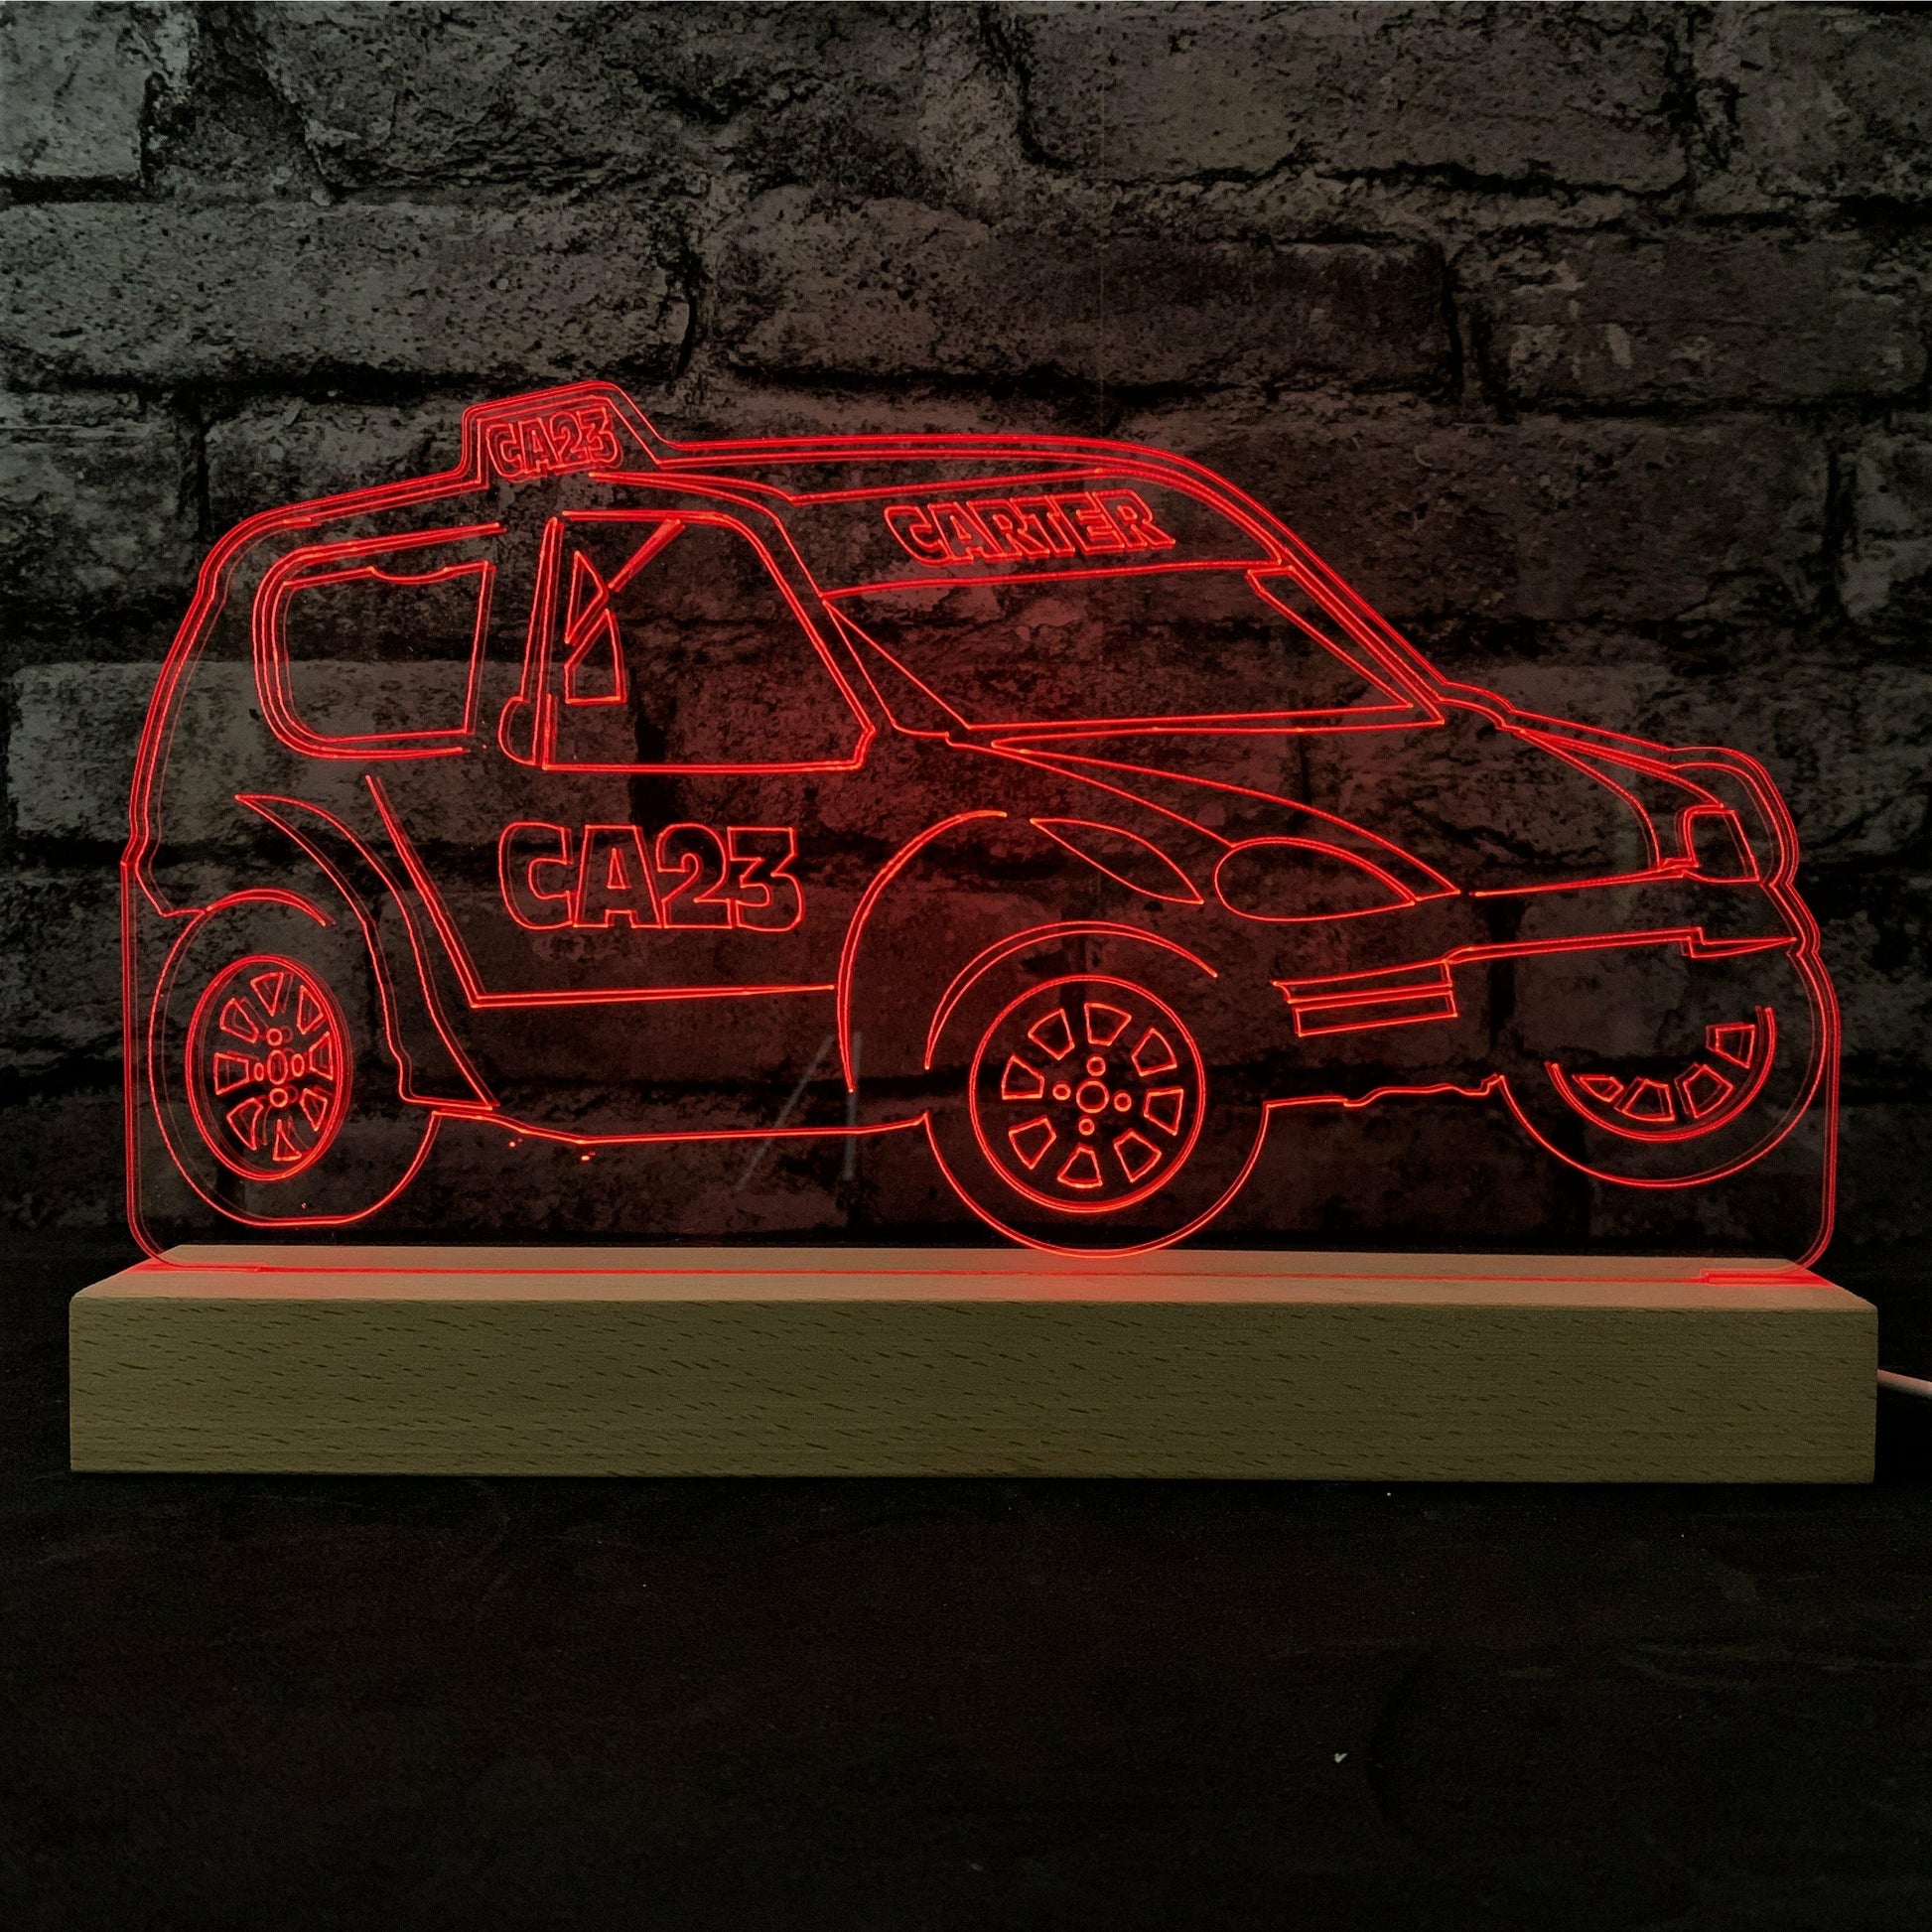 Class 7 - Autograss Night Light - Night Lights & Ambient Lighting - Stock Car & Banger Toy Tracks